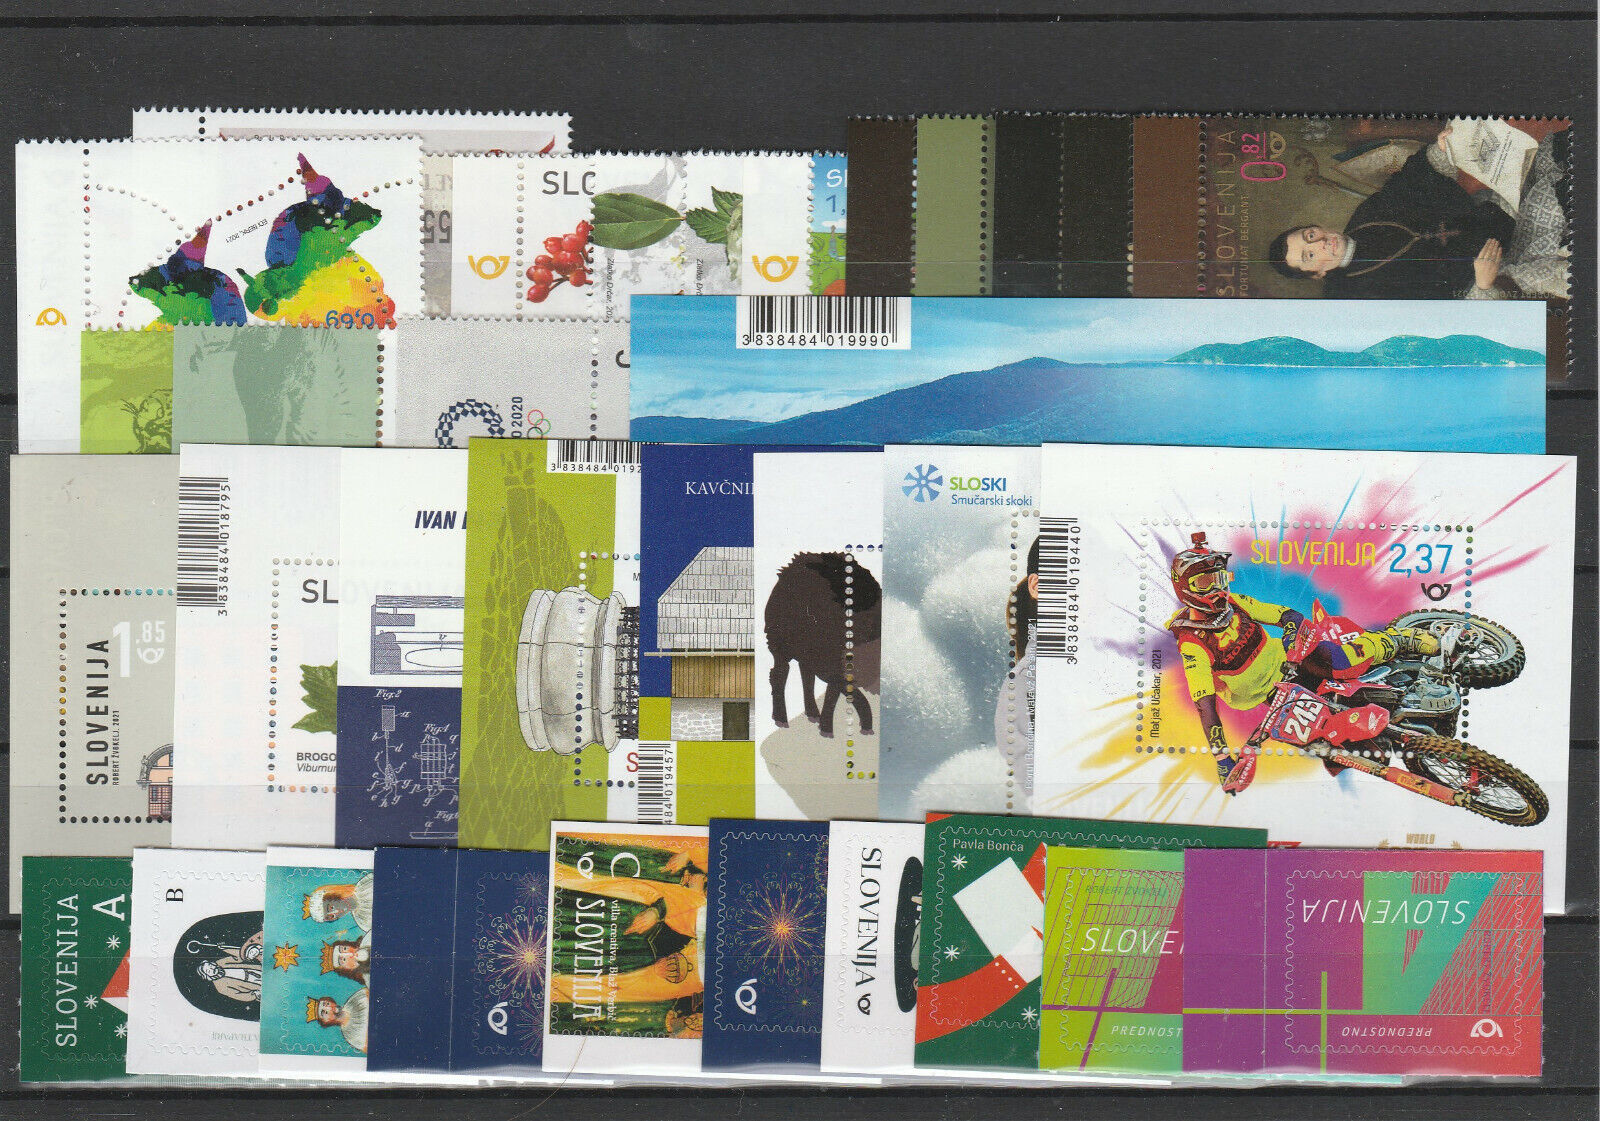 Slowenien Slovenia Slovenie 2021 year set all stamps, MNH Tim gajser, Olympic